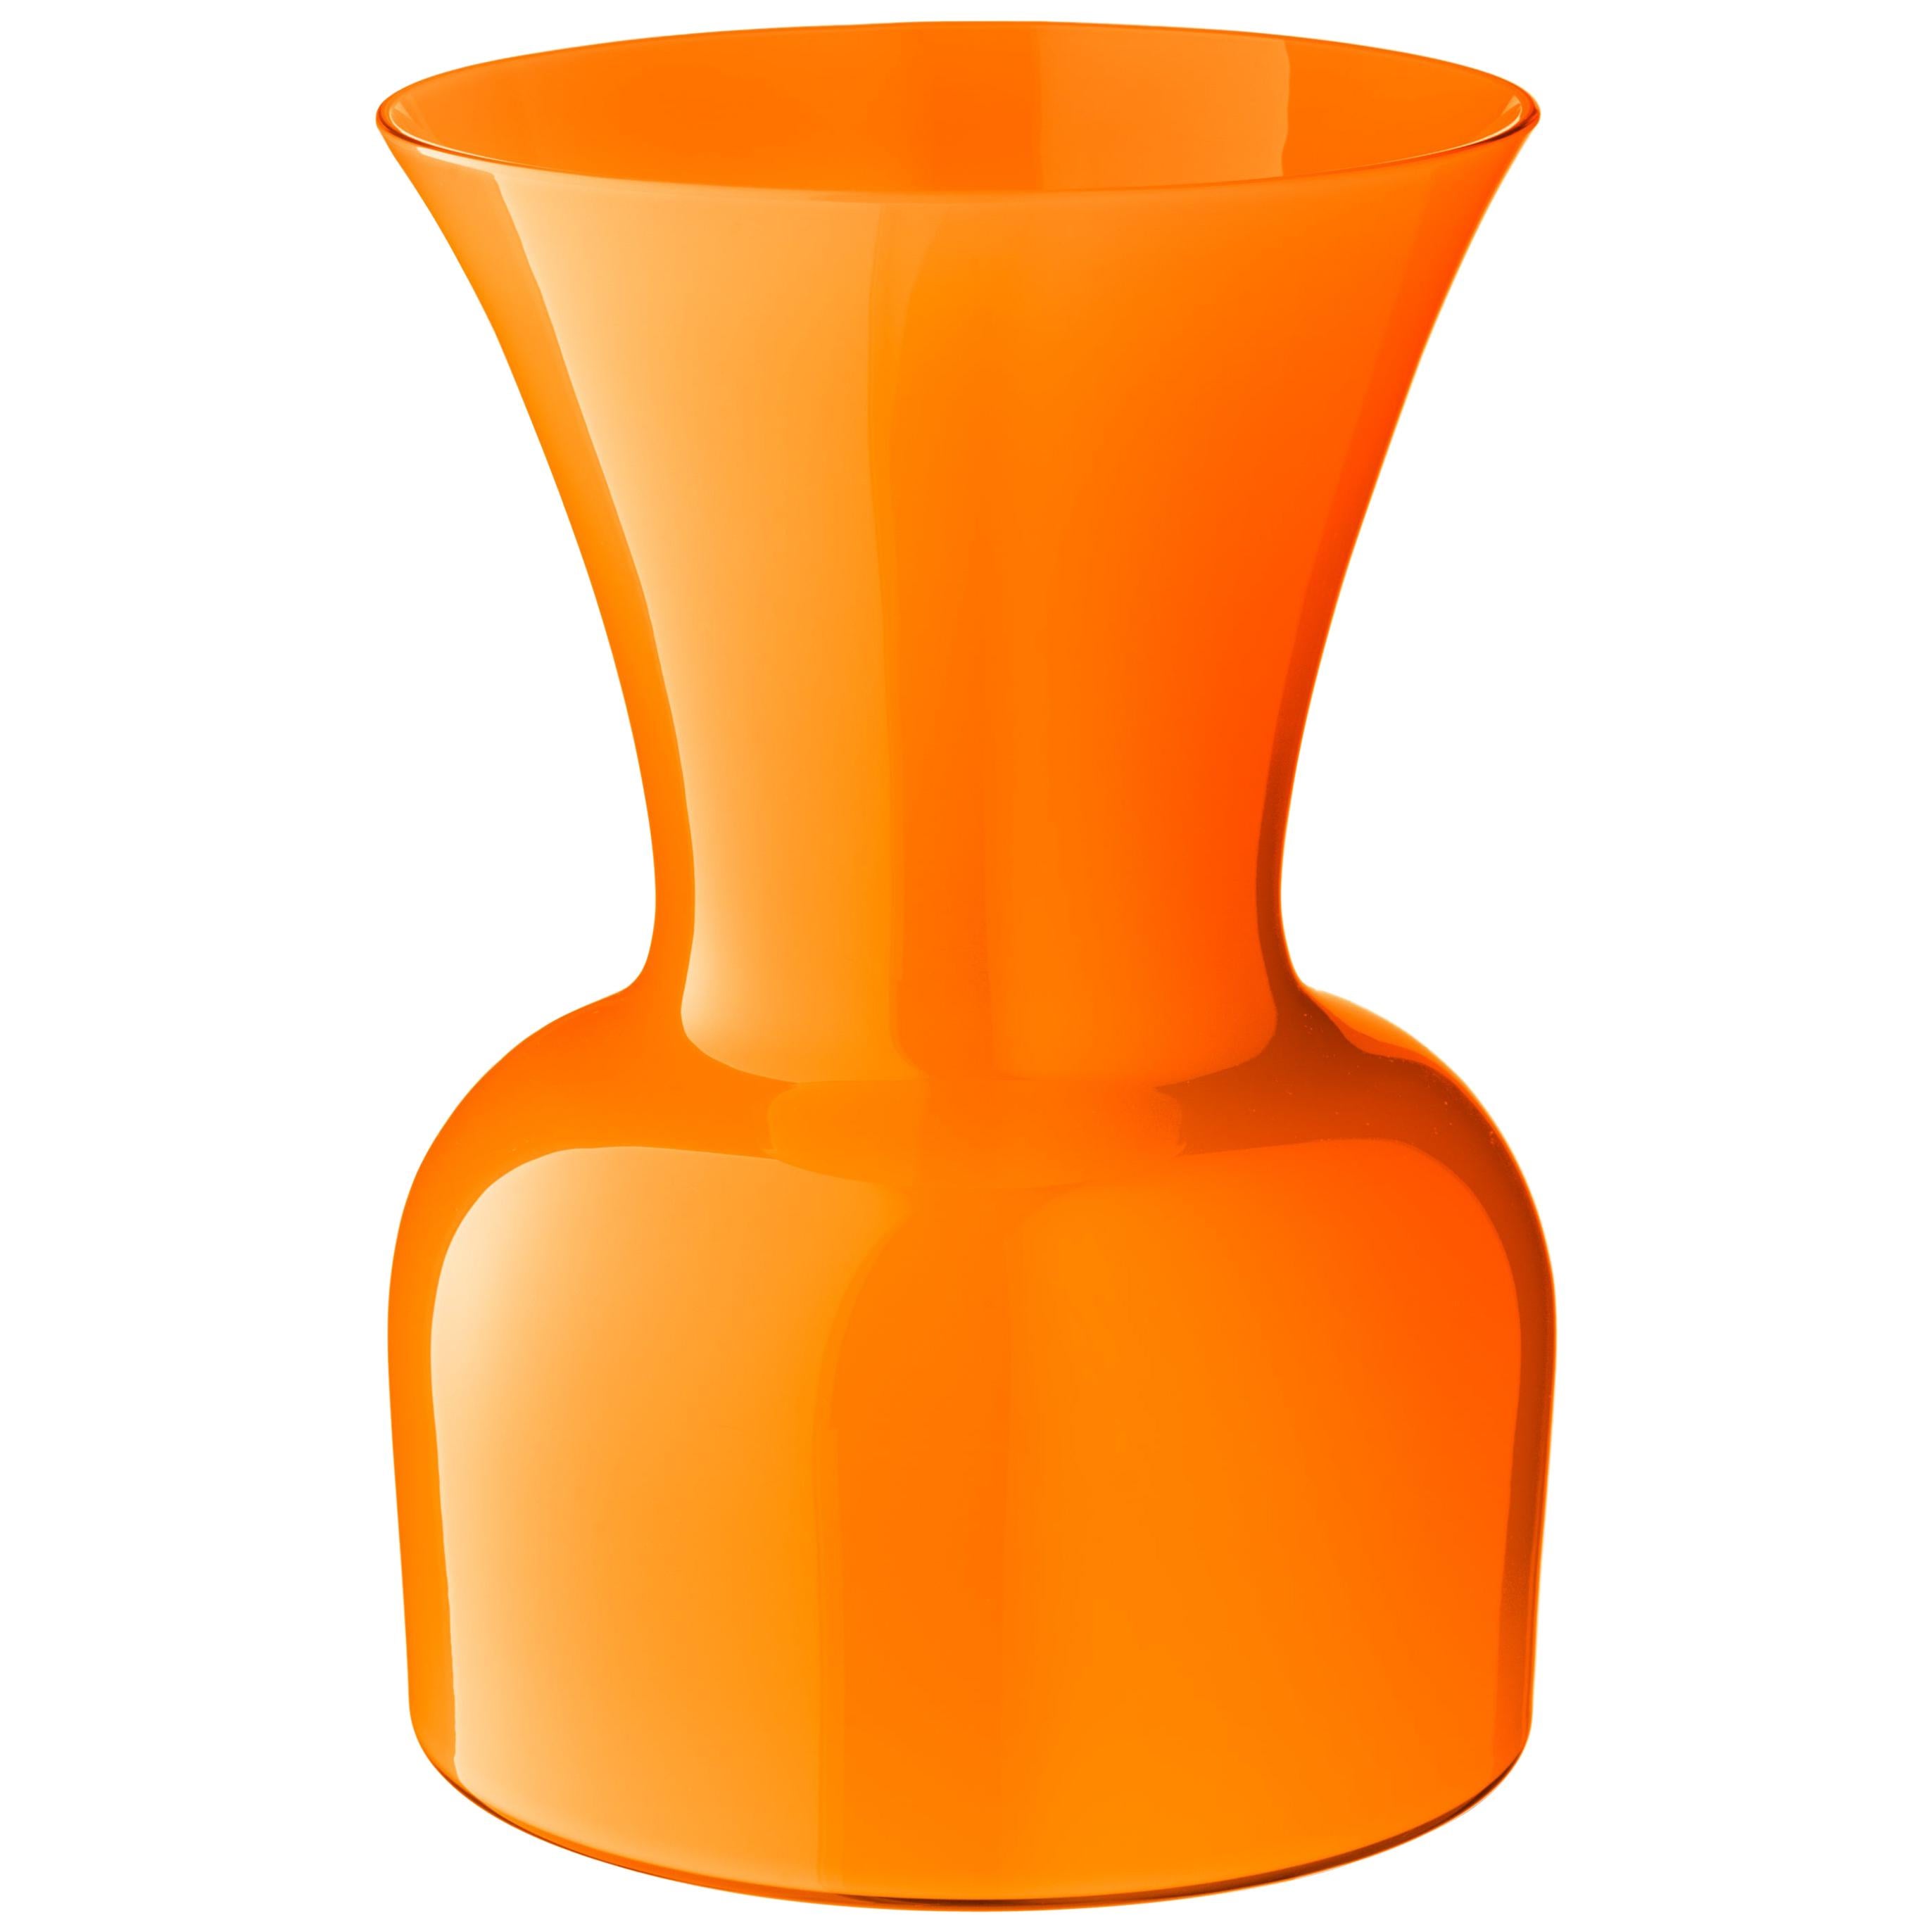 Orange (10076) Medium Profili Daisy Murano Glass Vase by Anna Gili